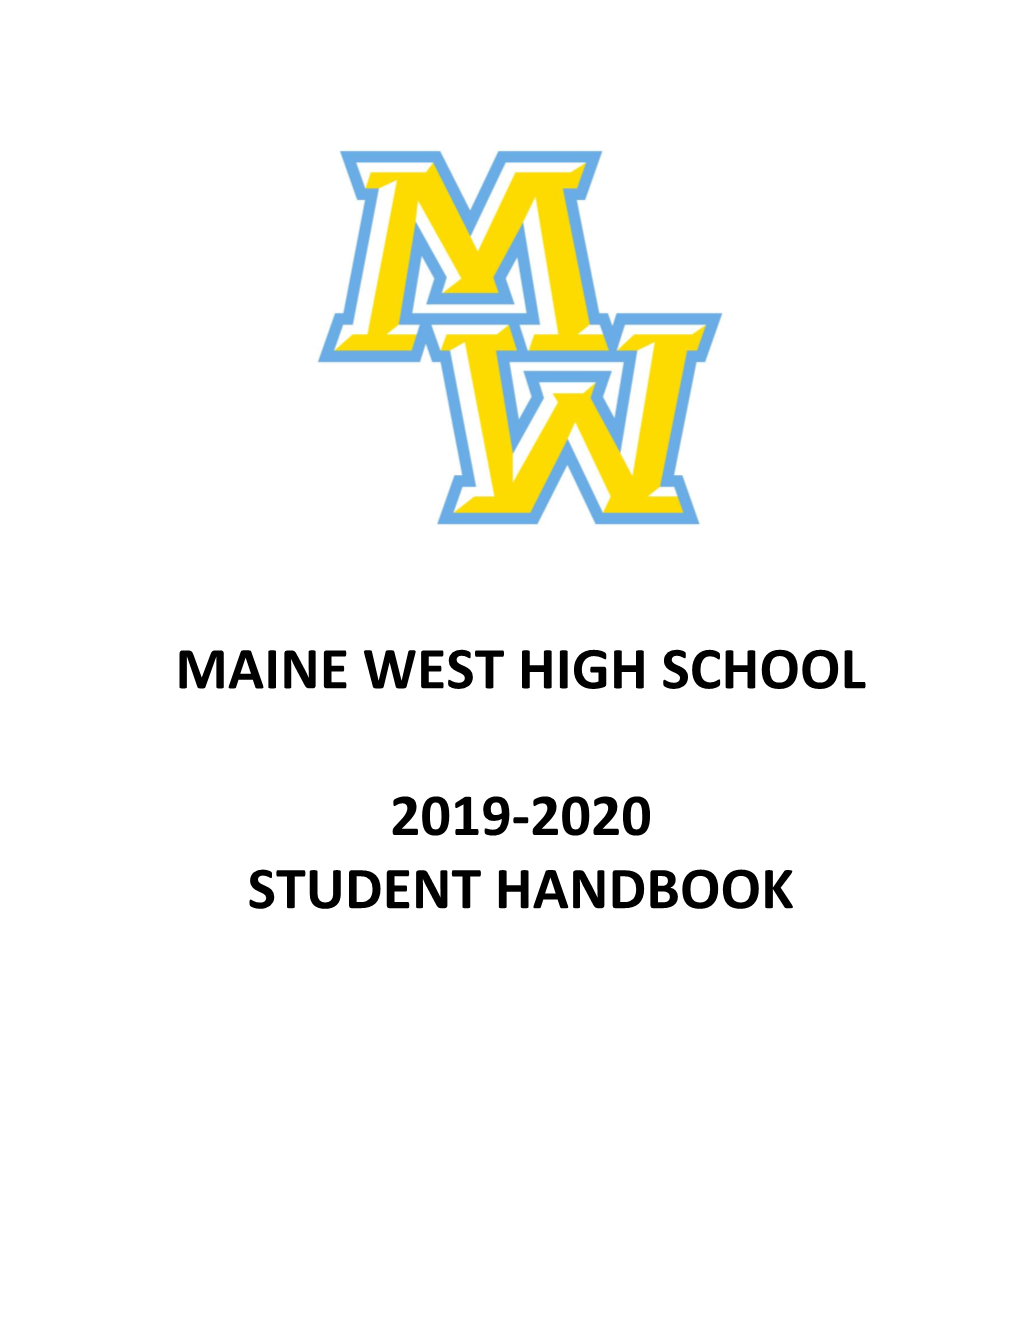 Maine West High School 2019-2020 Student Handbook